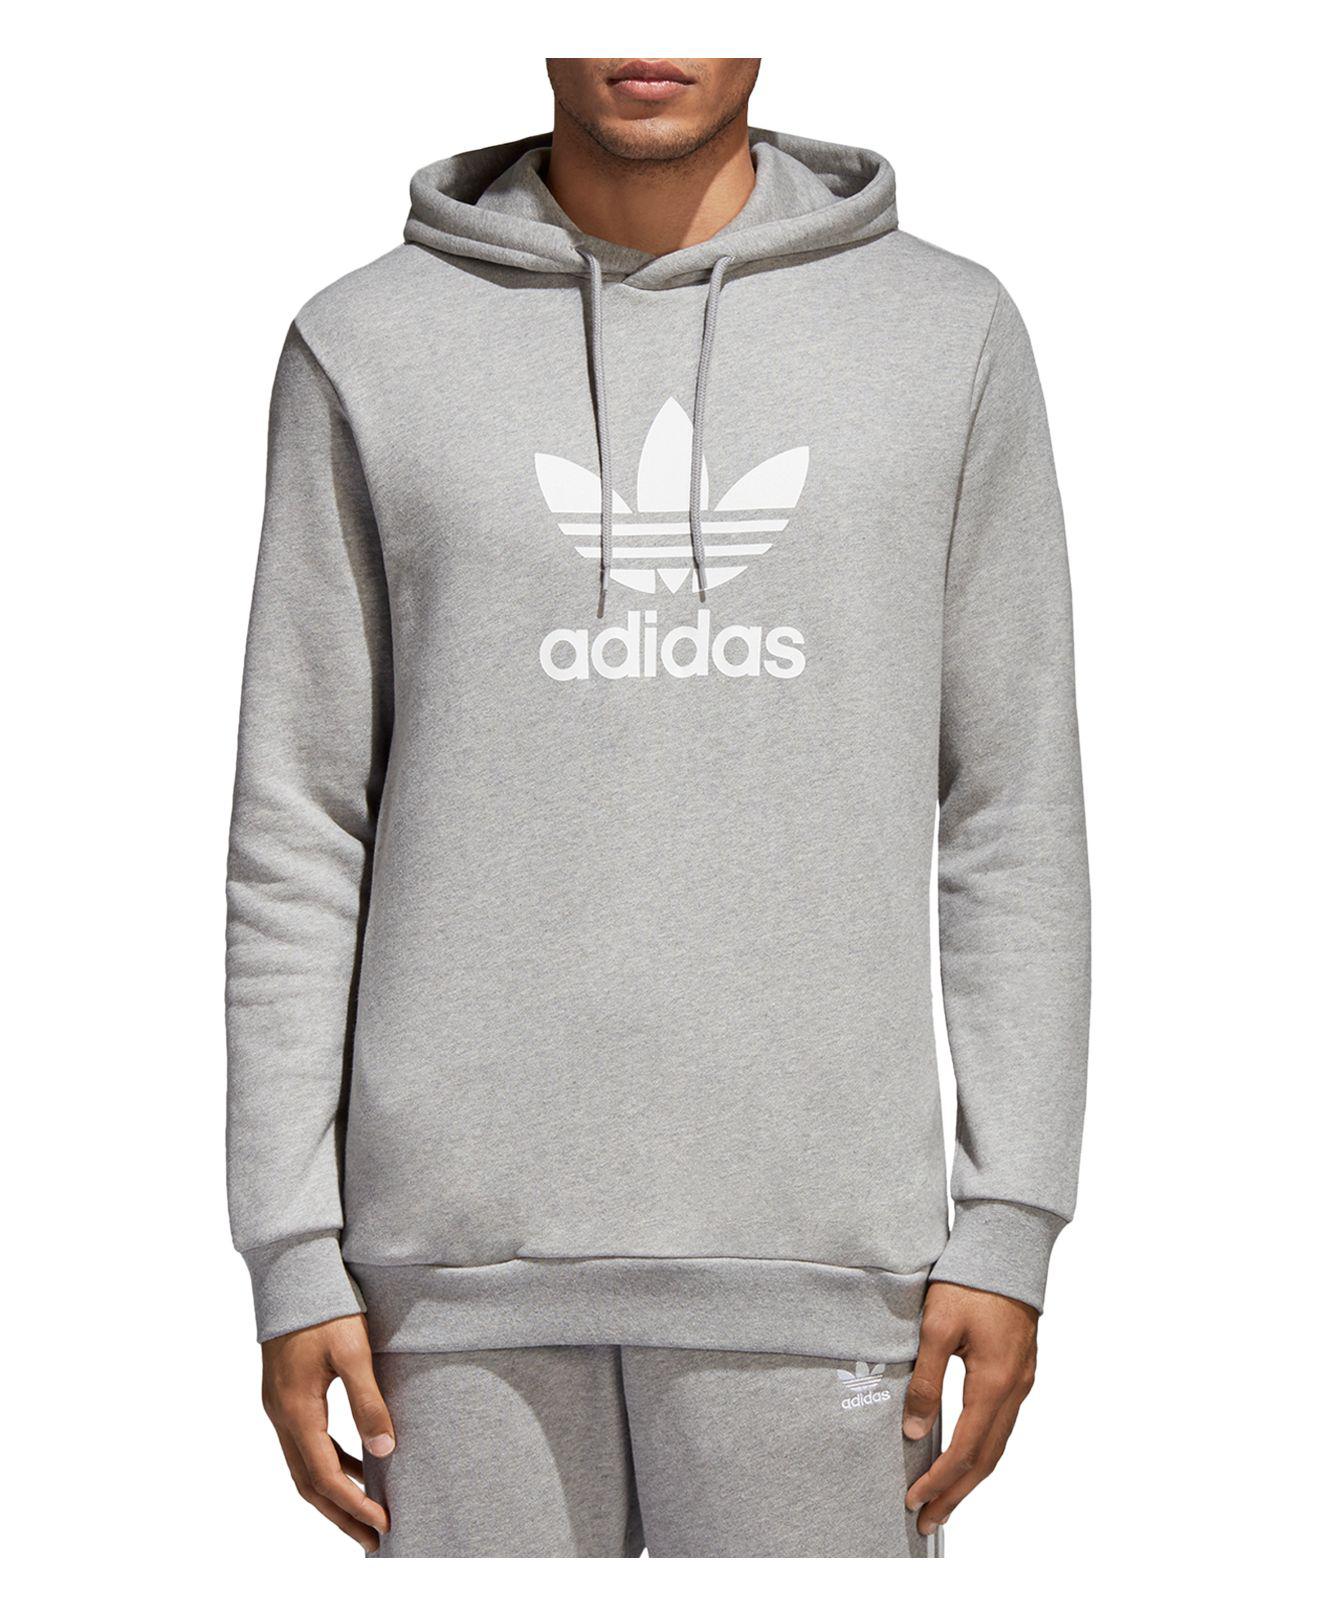 Lyst - Adidas Originals Trefoil Hooded Sweatshirt in Gray for Men